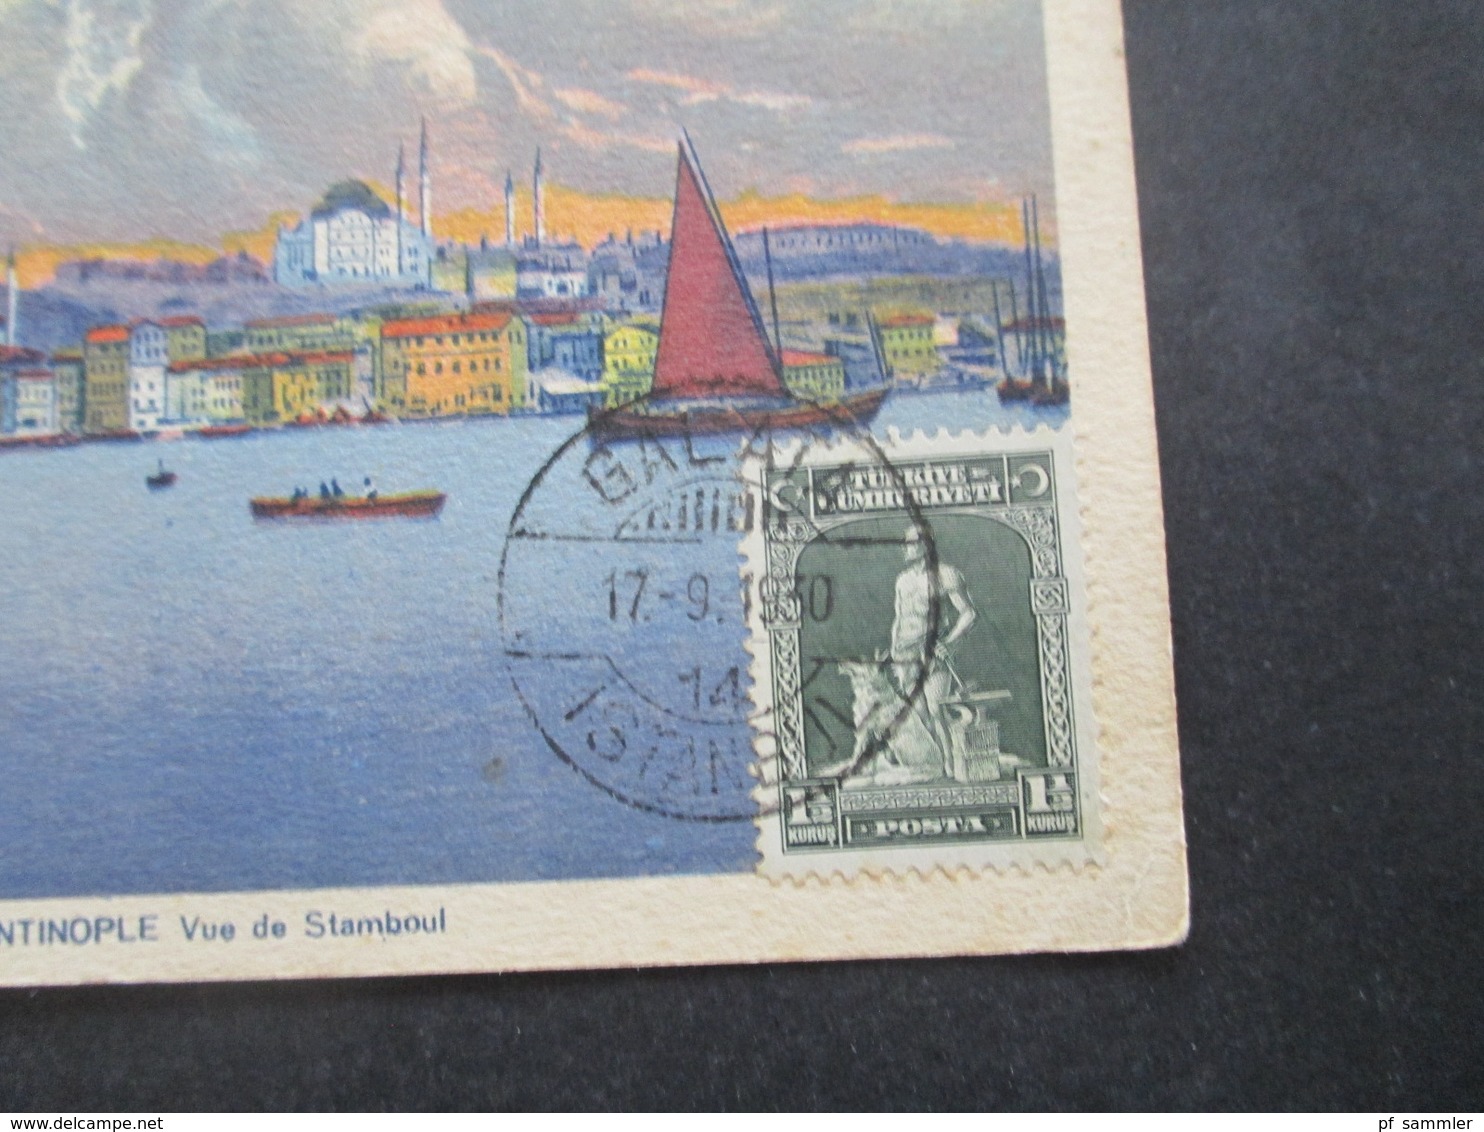 Türkei 1930 Bildseitig Frankierte AK Constantinople Vue De Stamboul Stempel Galata Nach Jugoslawien Gesendet - Covers & Documents